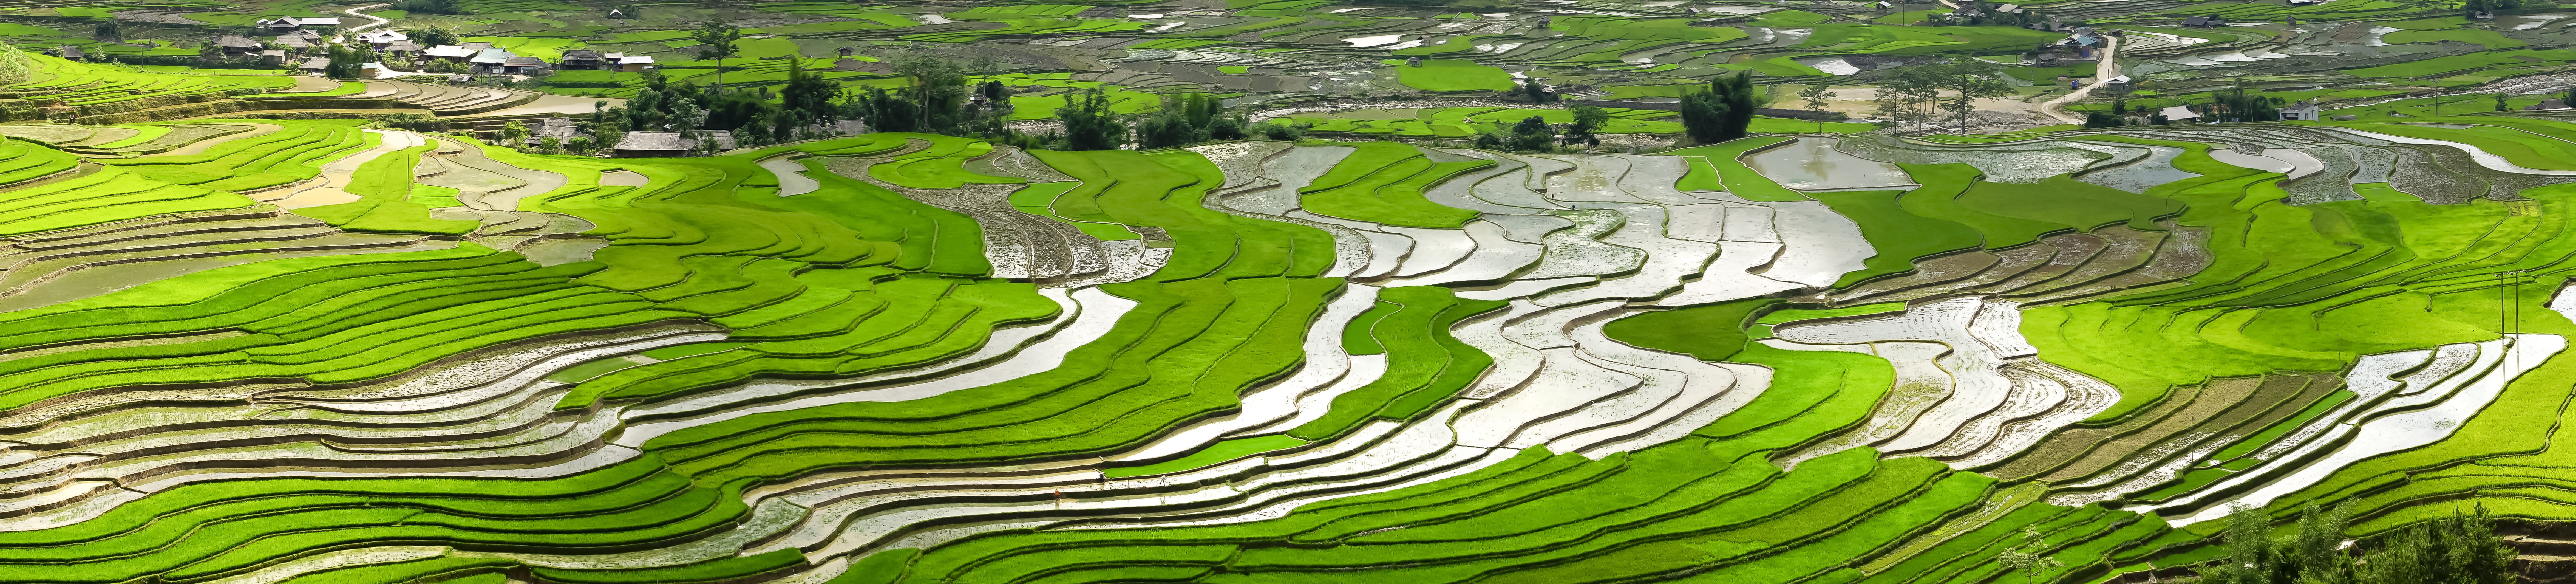 season, pour water, transplanted rice, minority, field, terraces